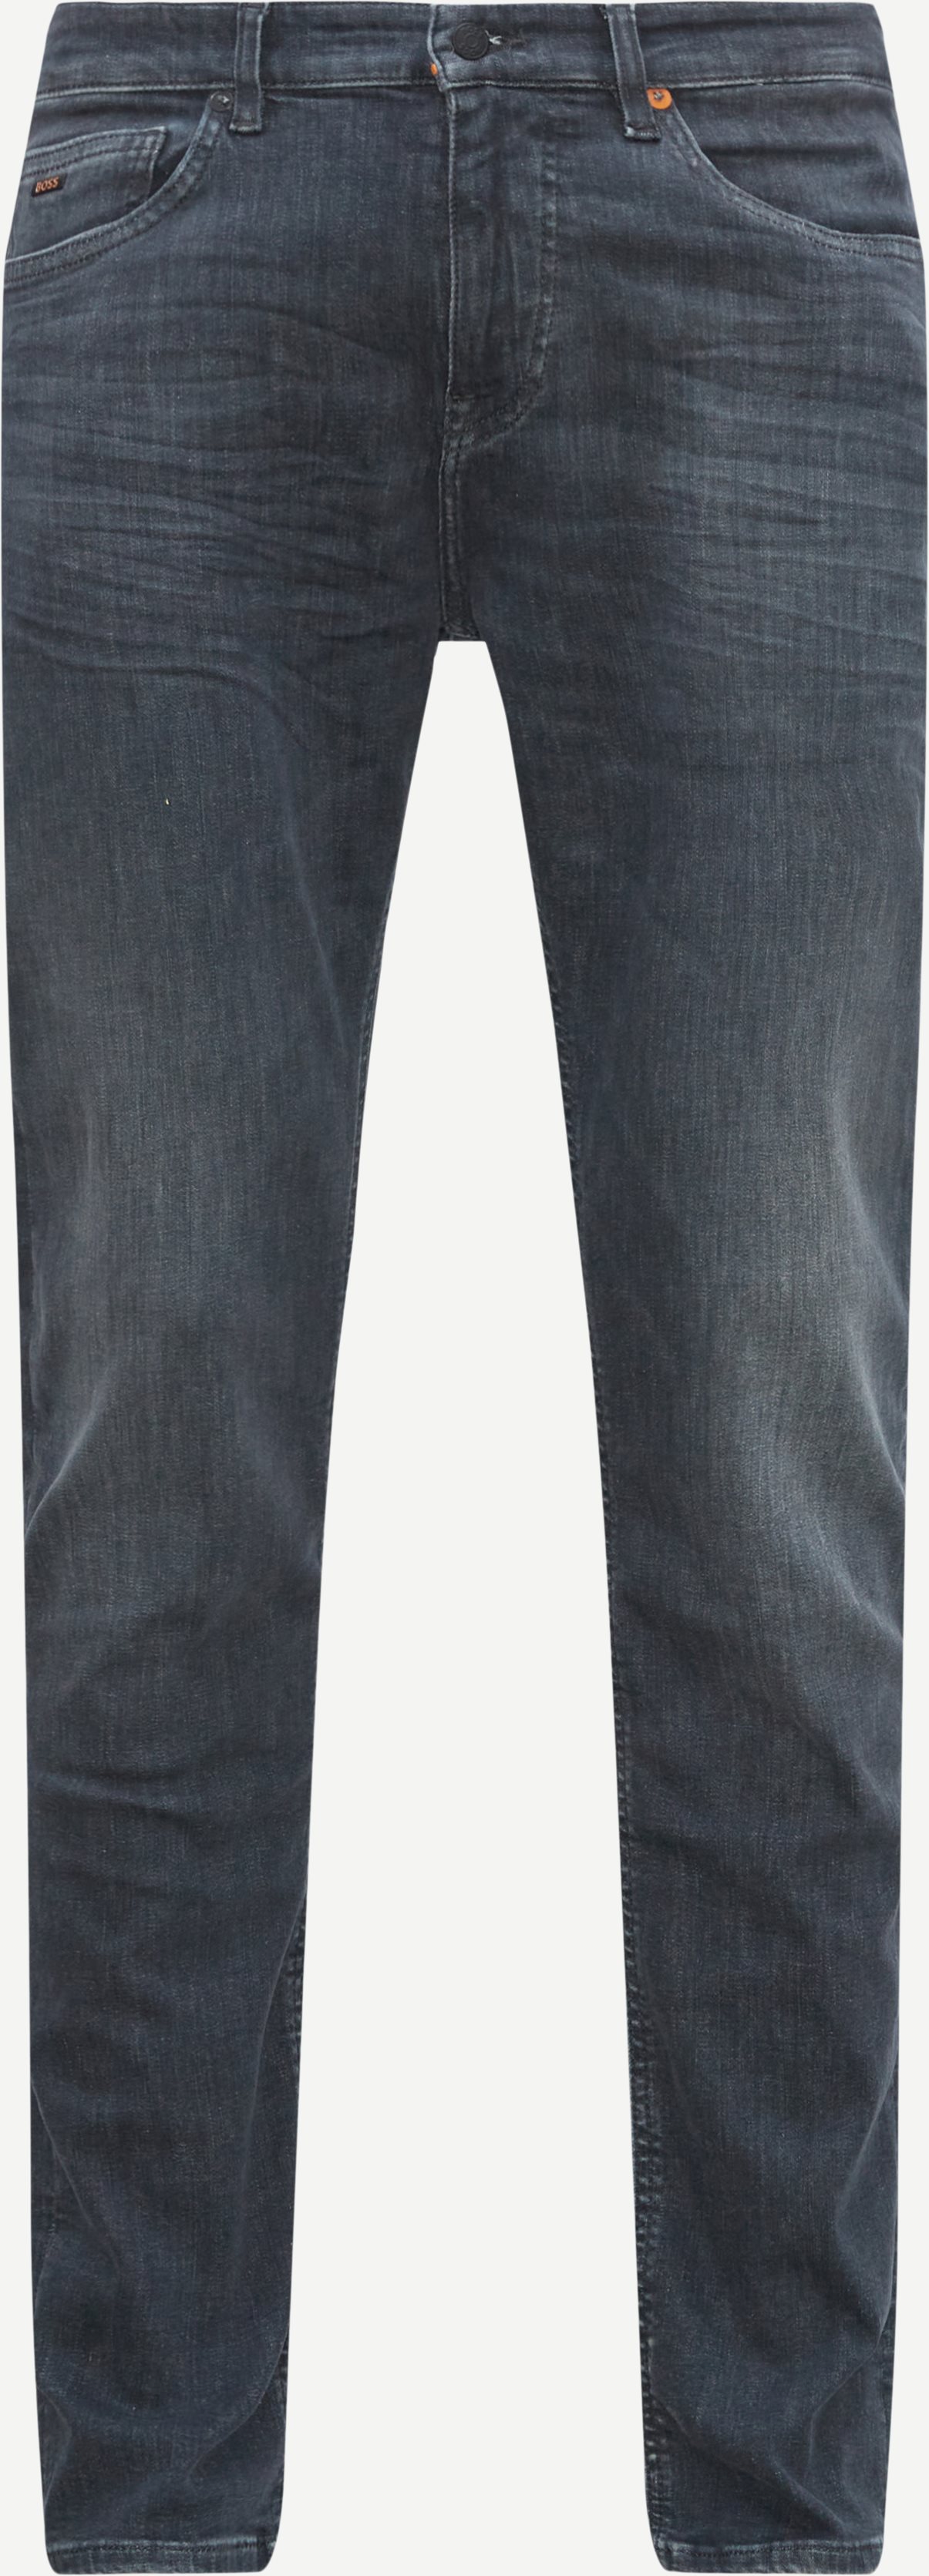 BOSS Casual Jeans 4445 DELAWARE Grey